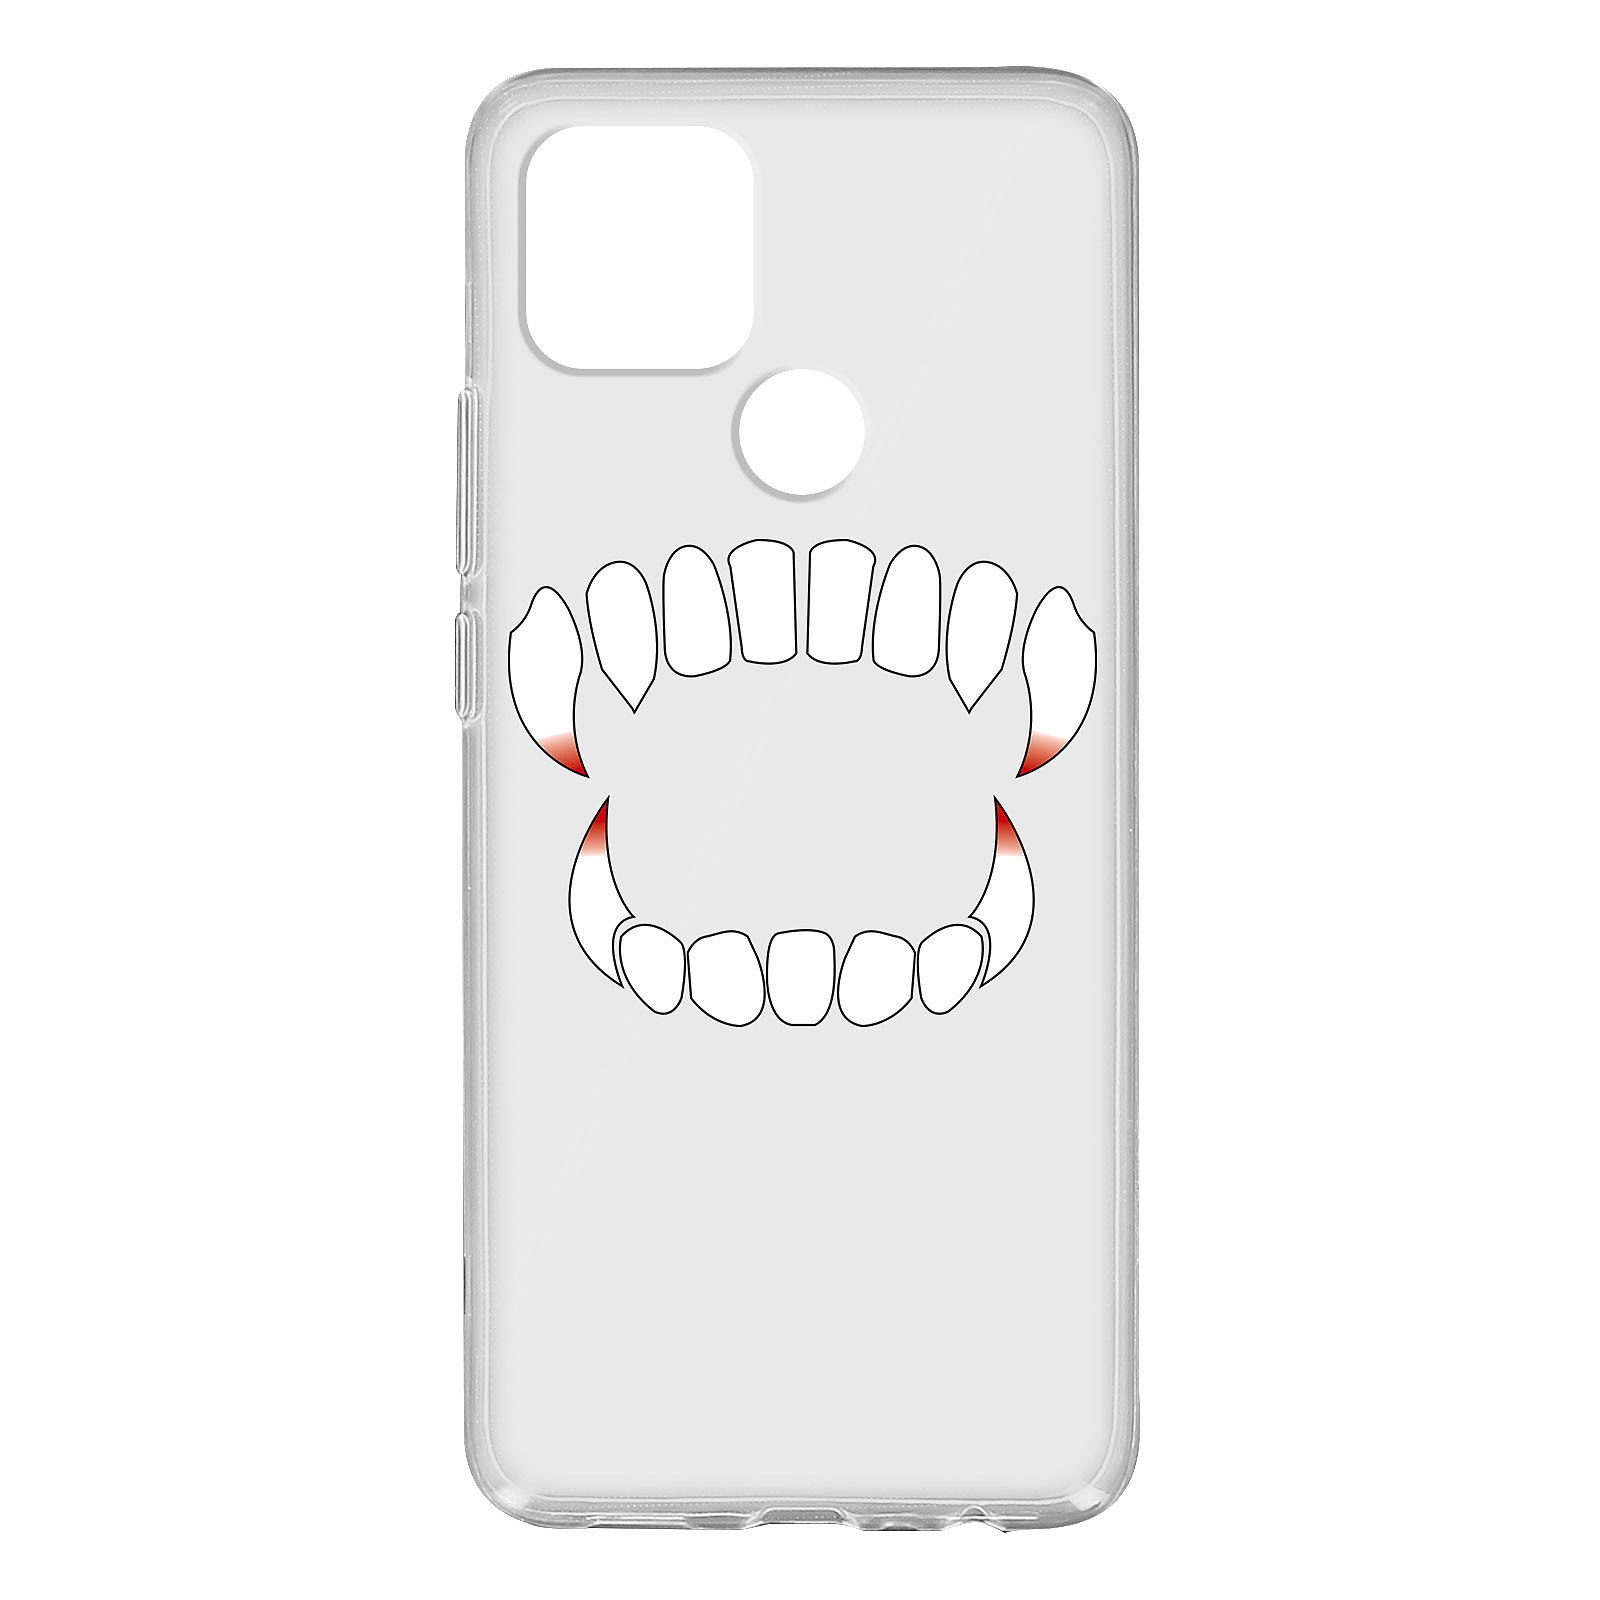 Avizar Coque Dents de vampire Collection Halloween Protection personnalisee Transparent - Coque telephone Avizar